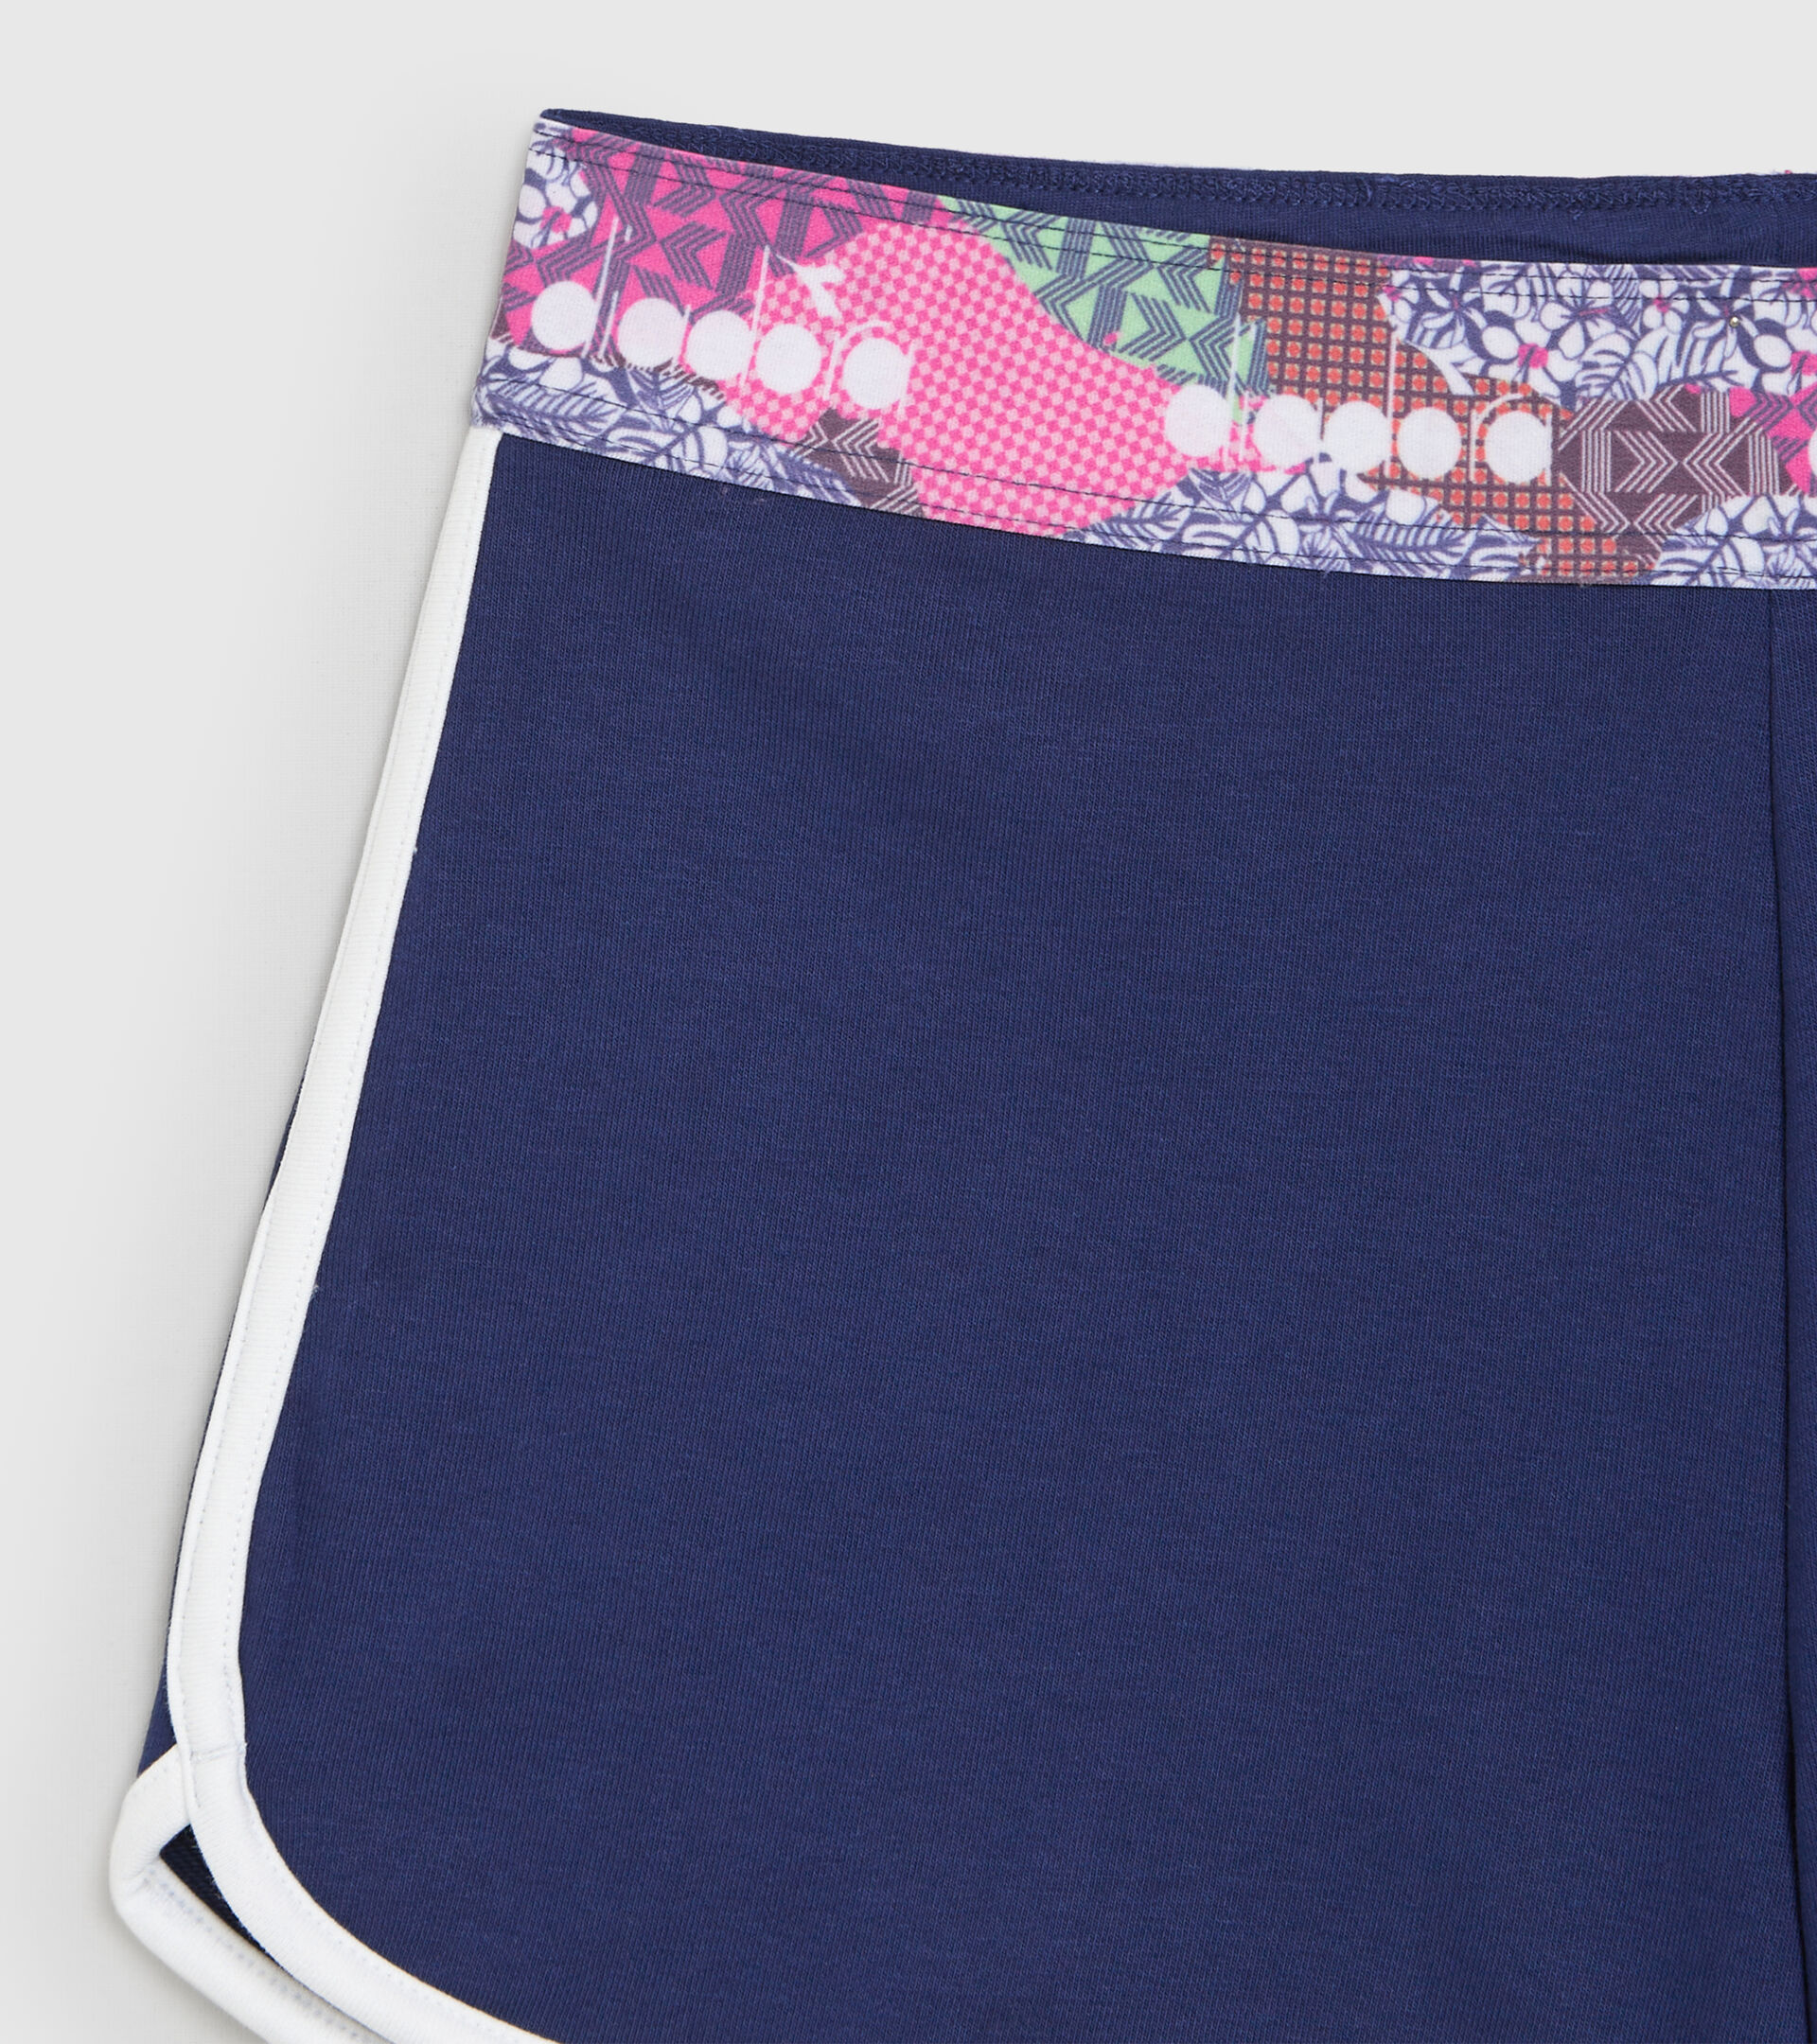 Pantalones cortos de algodón - Mujer L. SHORT FLOSS PROFUNDO COBALTO - Diadora